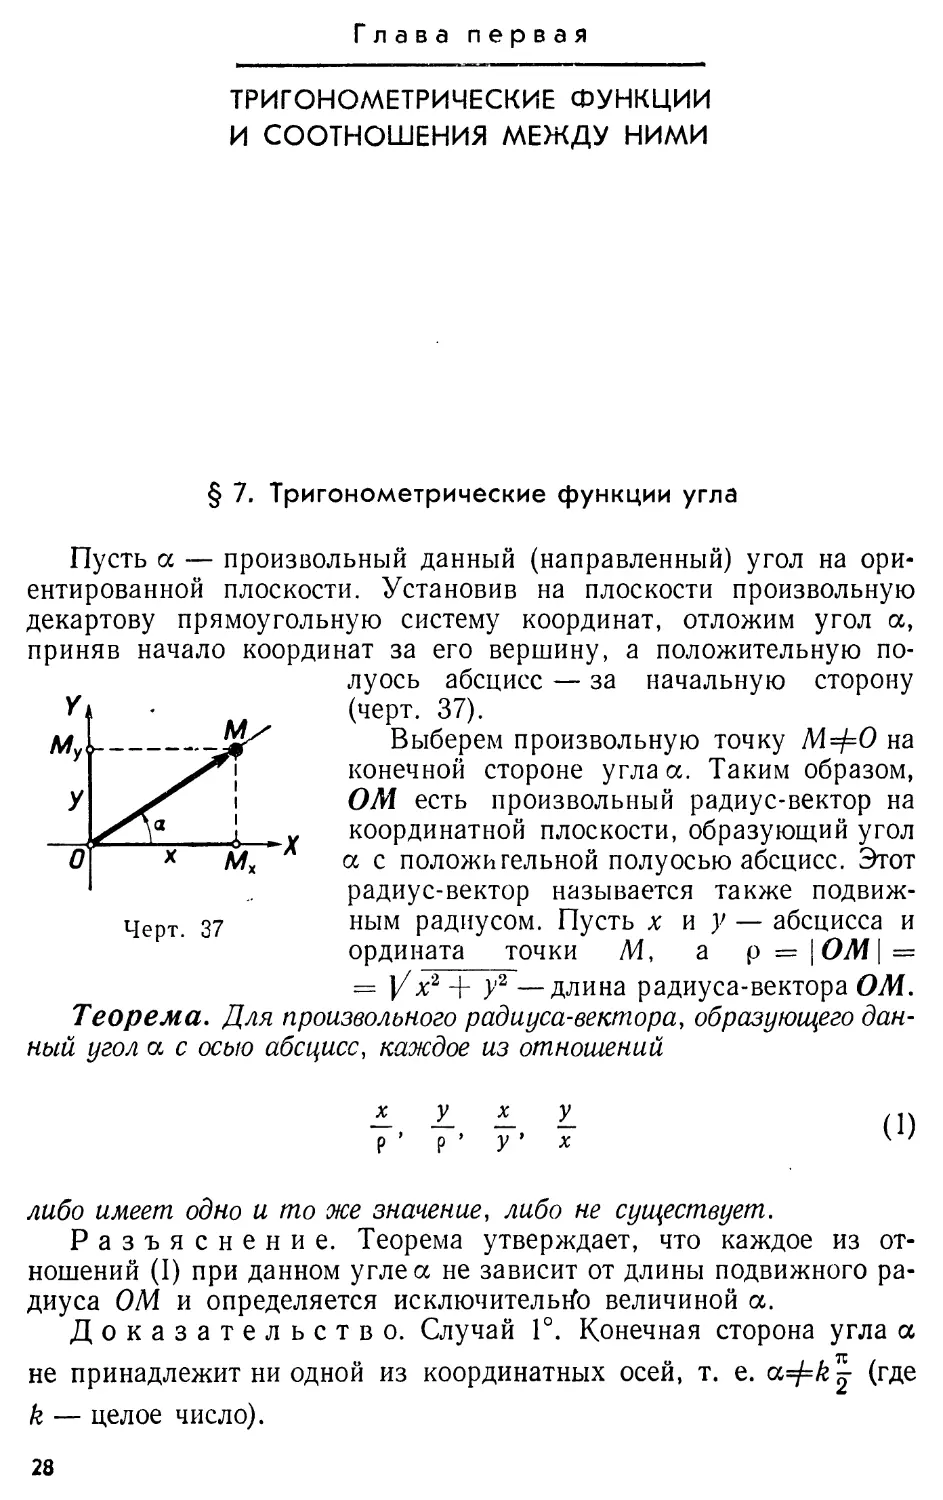 Глава I. Тригонометрические функции и соотношения между ними